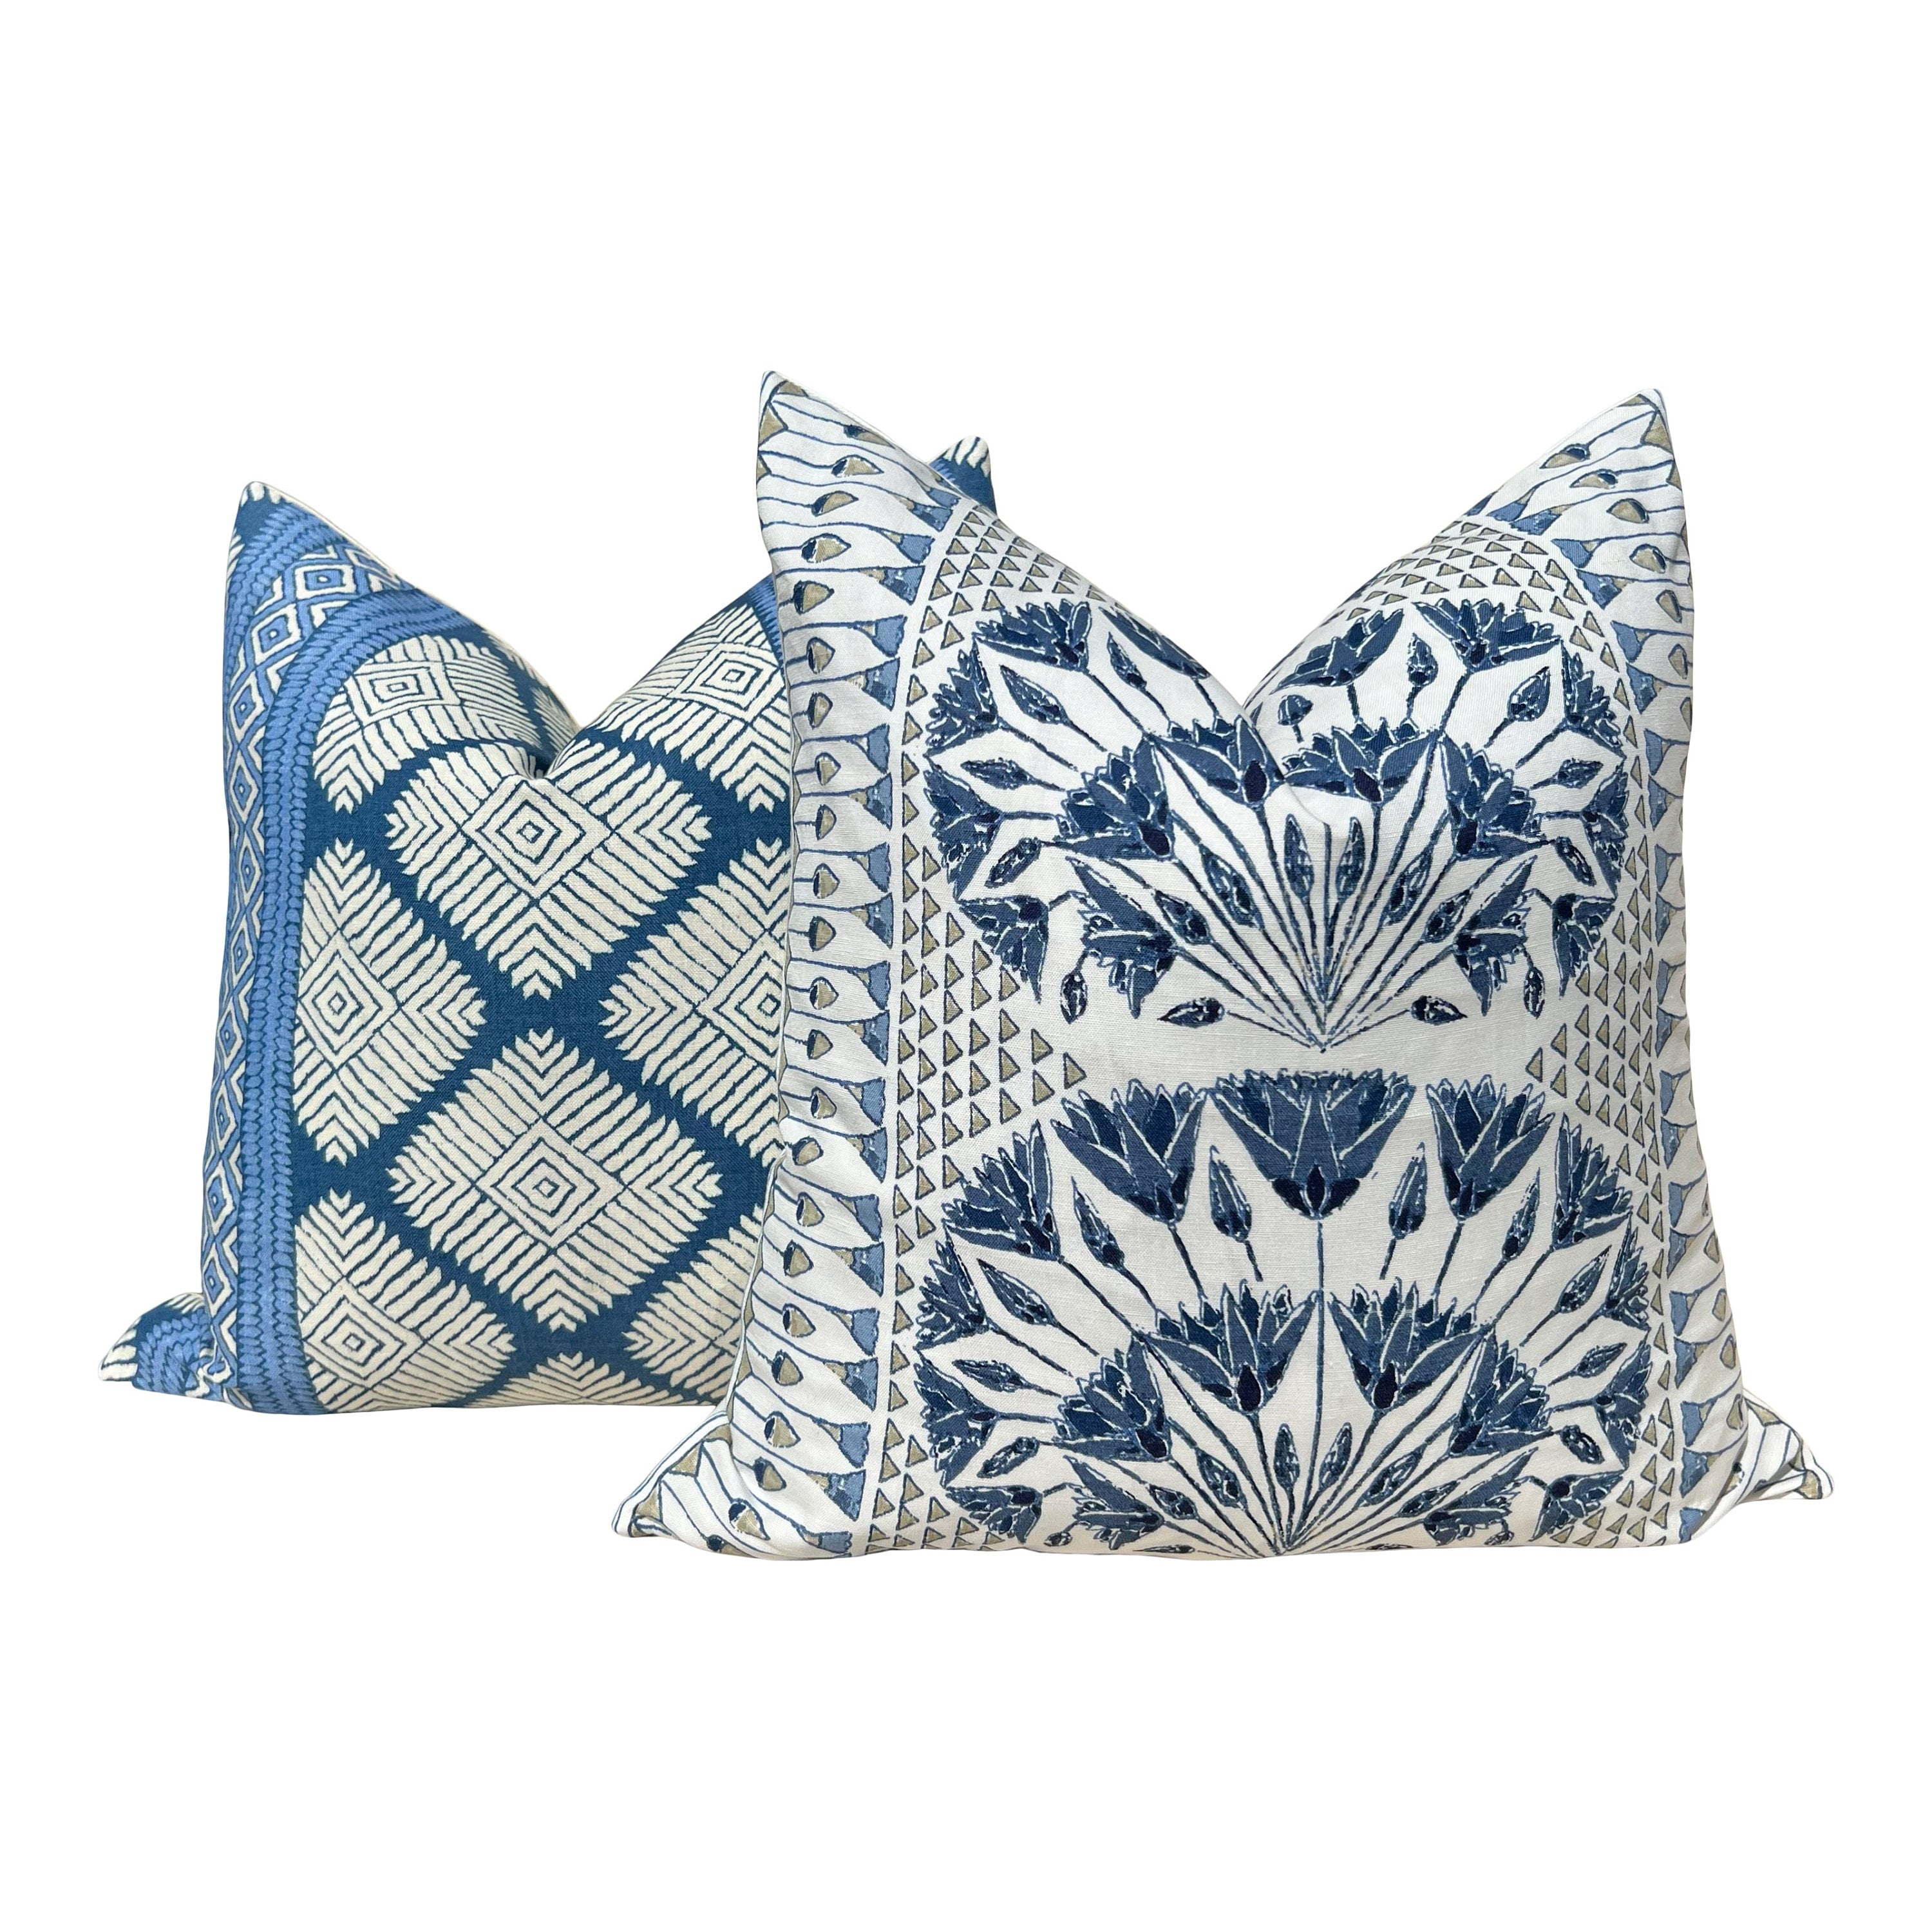 Thibaut Austin Striped Pillow in Blue. Lumbar Geometric Pillow Cover, Euro Sham Covers in Blue, Designer Pillows, Navy Blue Pillow Cover